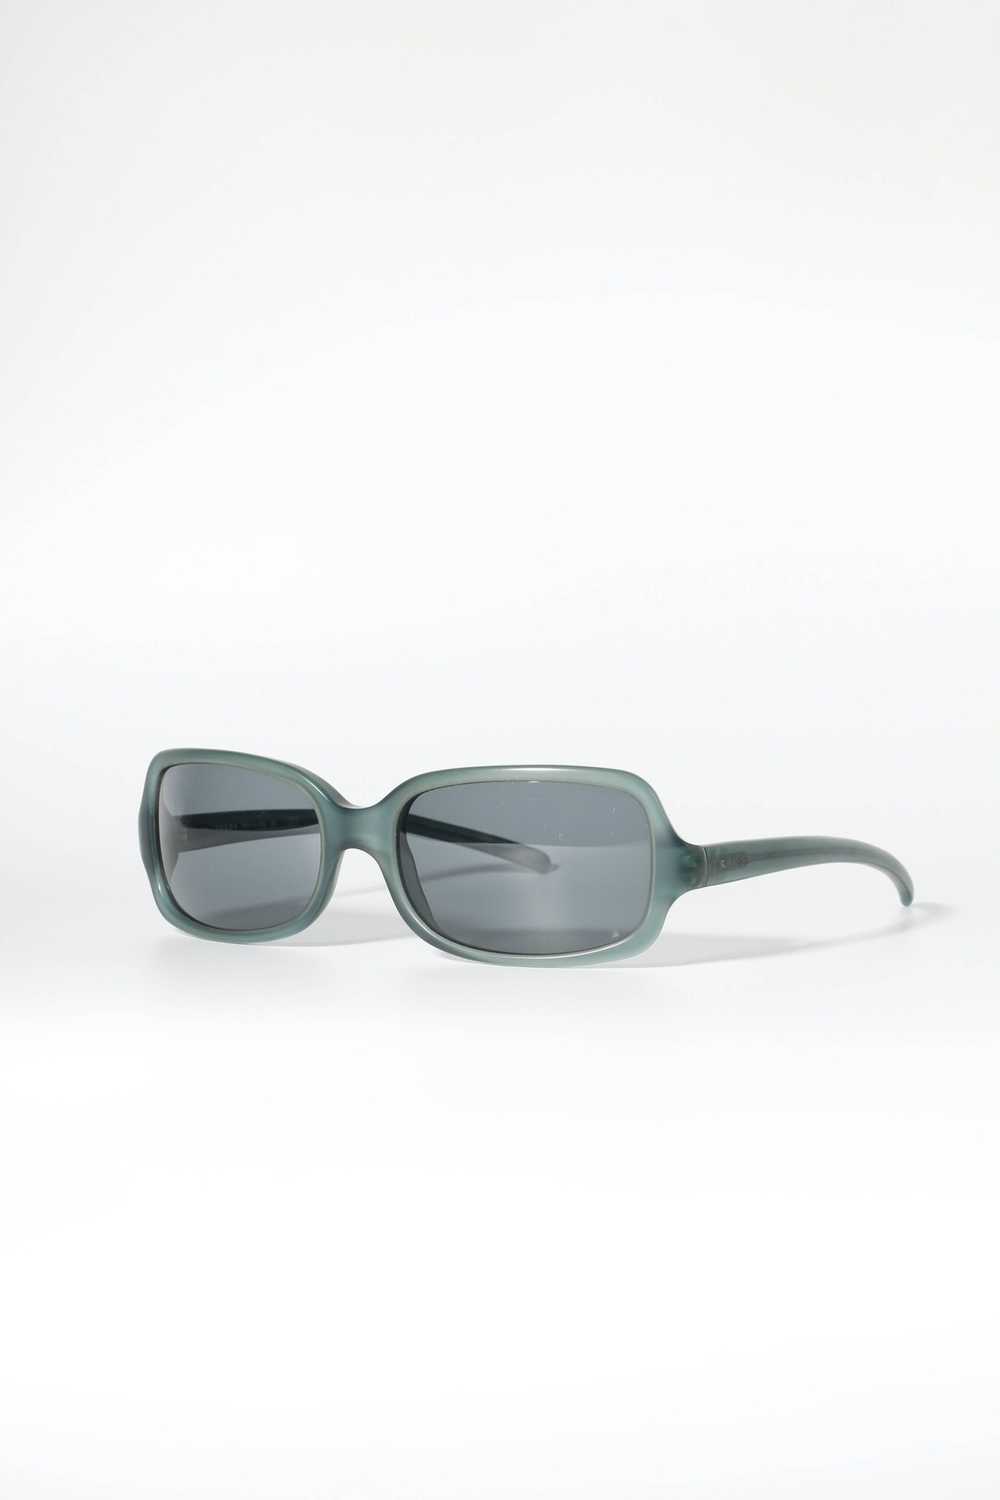 Prada Prada SS2000 sunglasses - image 3